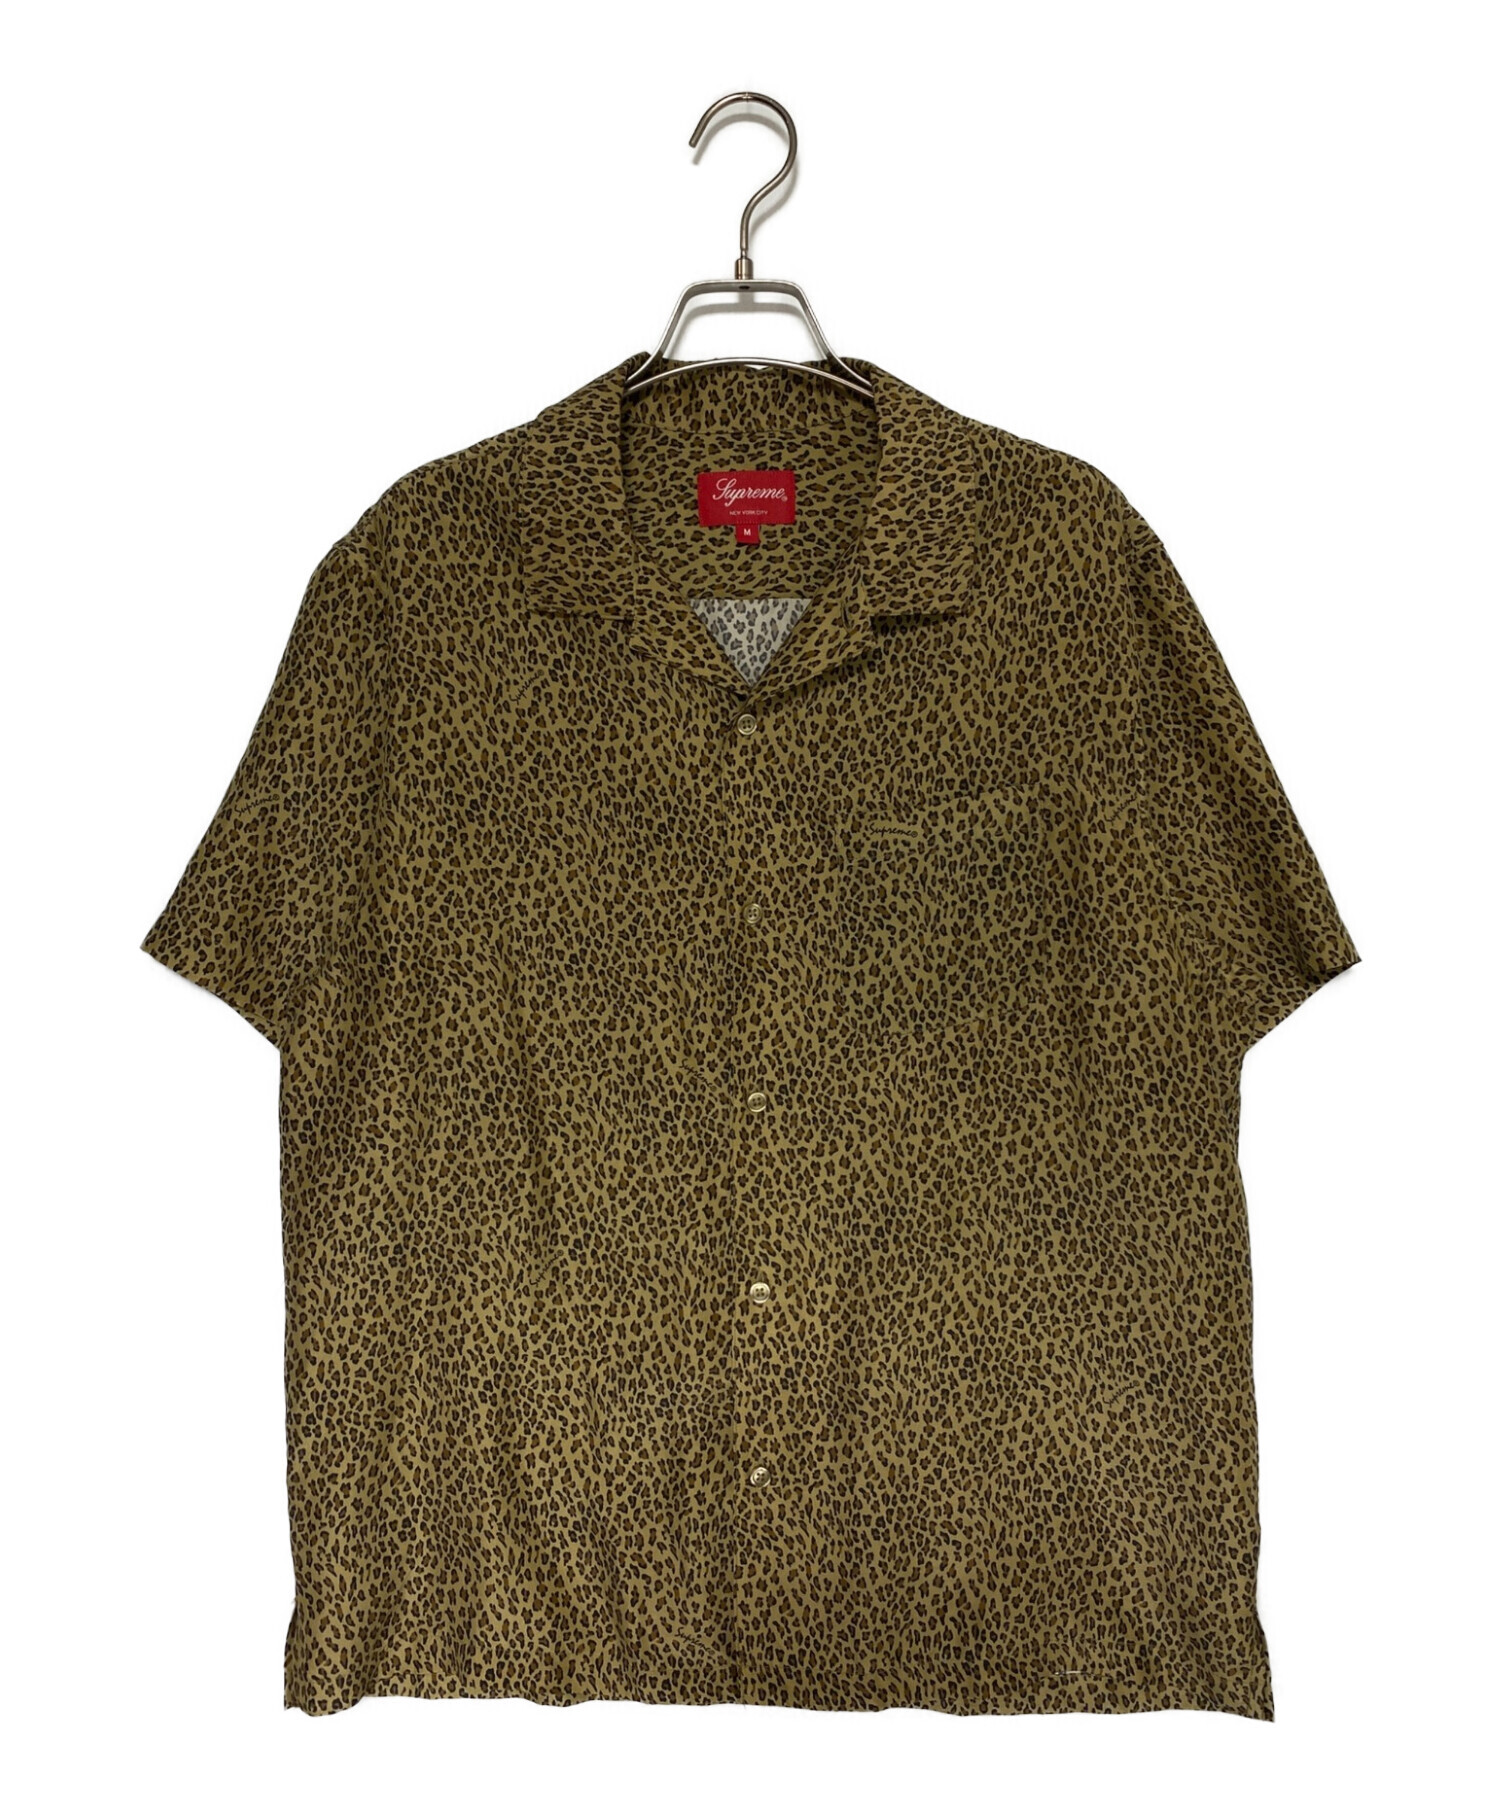 SUPREME (シュプリーム) Leopard Silk S/S Shirt Tan イエロー サイズ:M